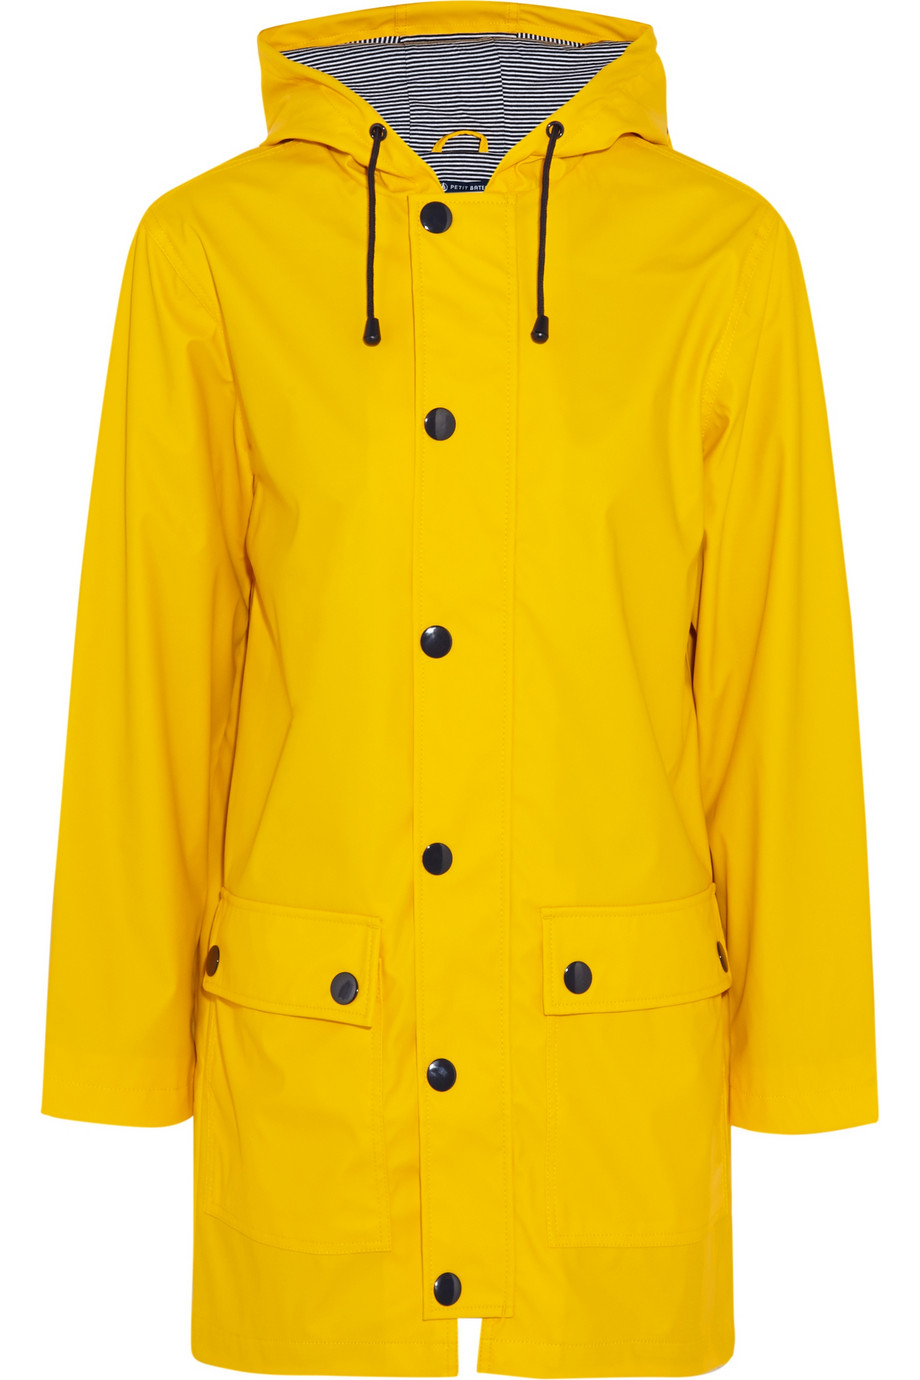 Petit Bateau Yellow Oilskin Raincoat | Lyst